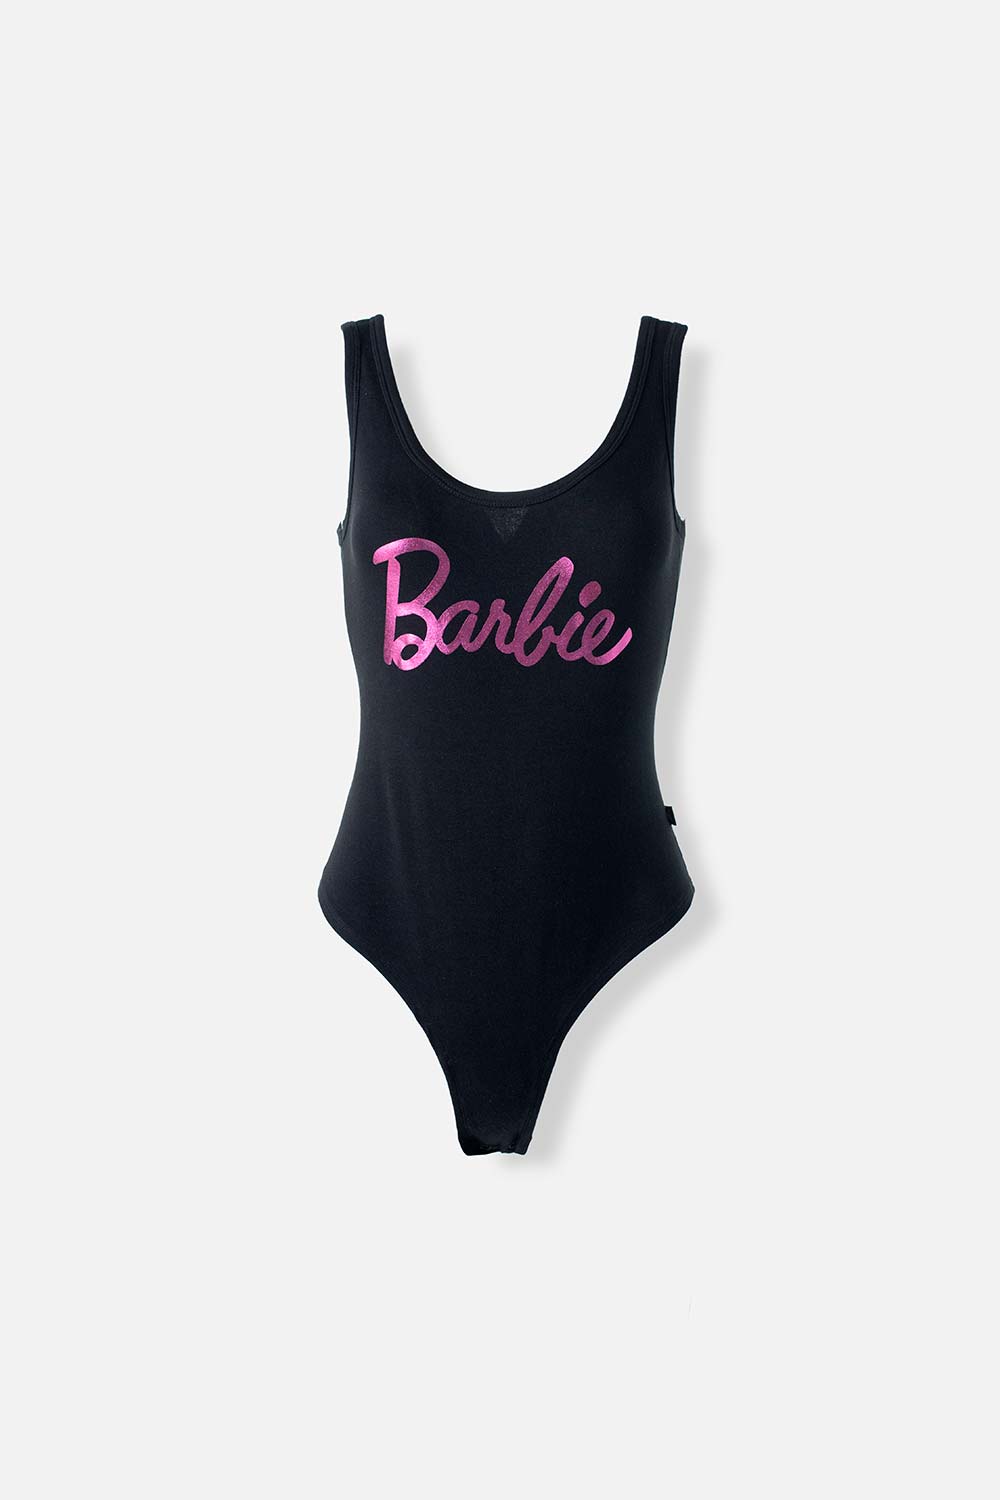 Body de Barbie negro para mujer XS-0